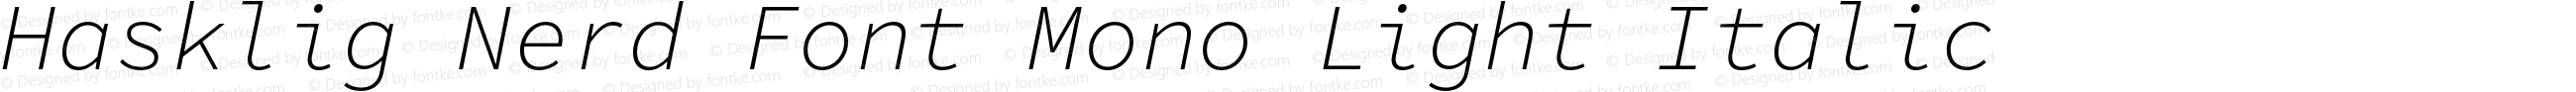 Hasklig Light Italic Nerd Font Complete Mono